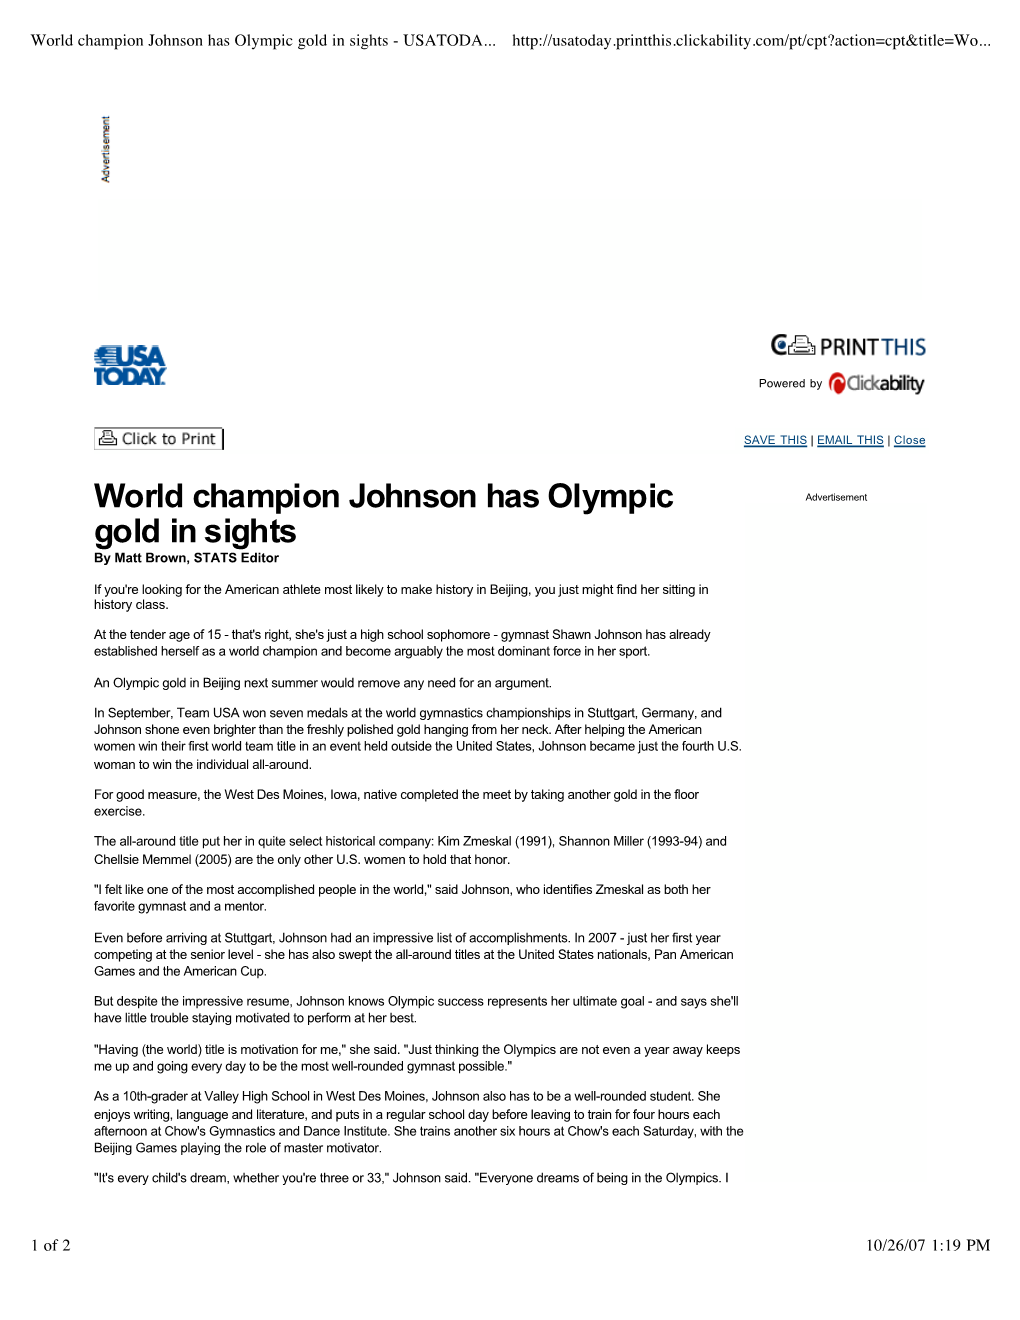 World Champion Johnson Has Olympic Gold in Sights - USATODA